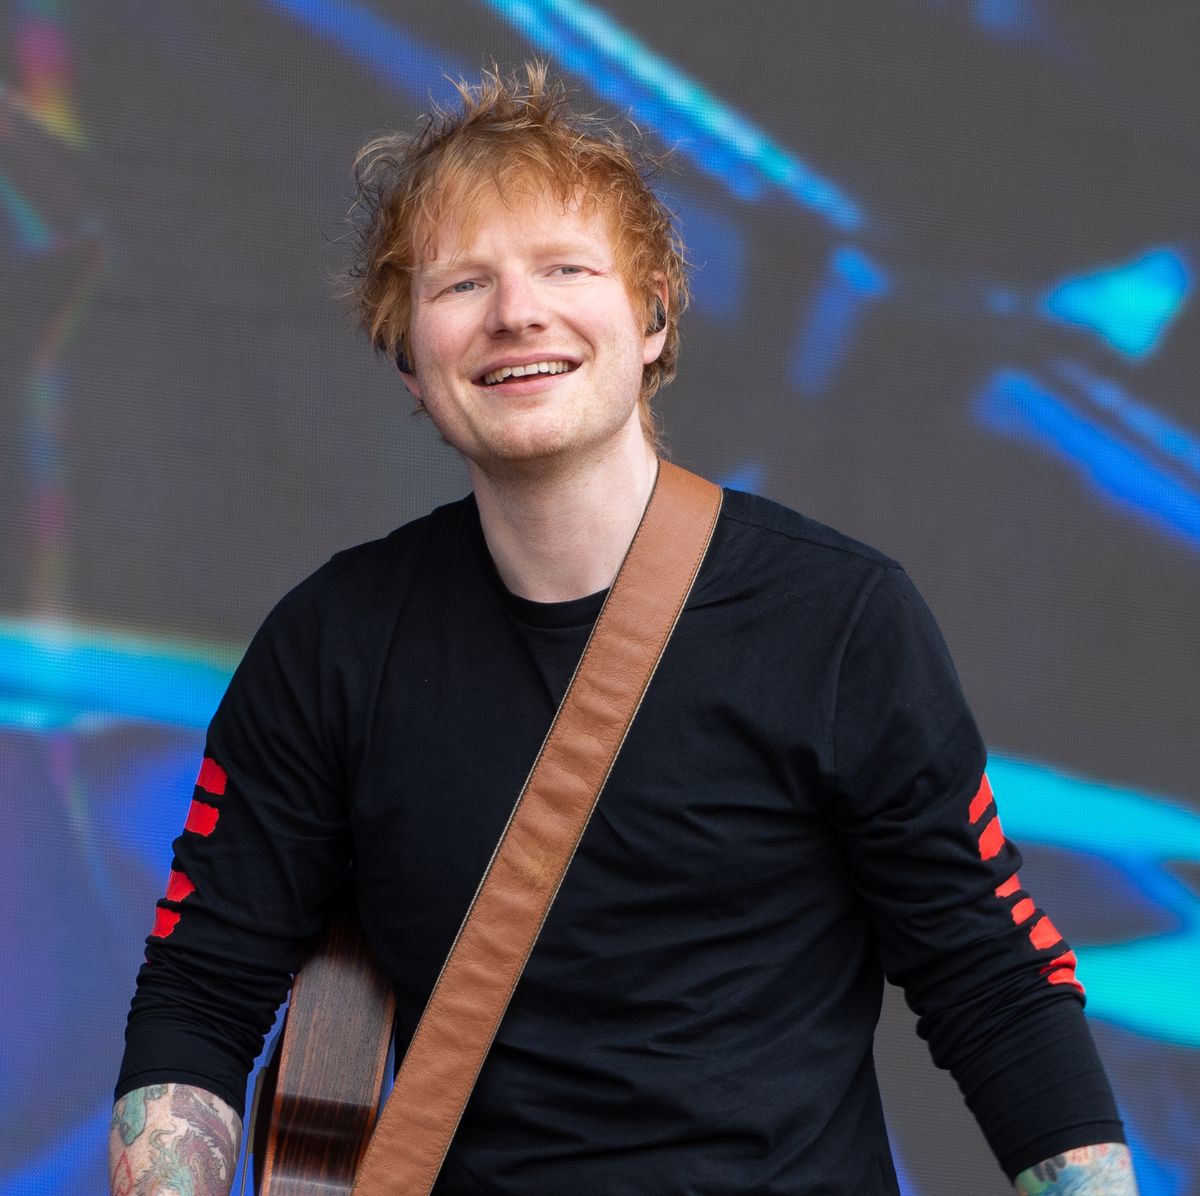 Ed Sheeran's Net Worth, Salary, and Bank Account